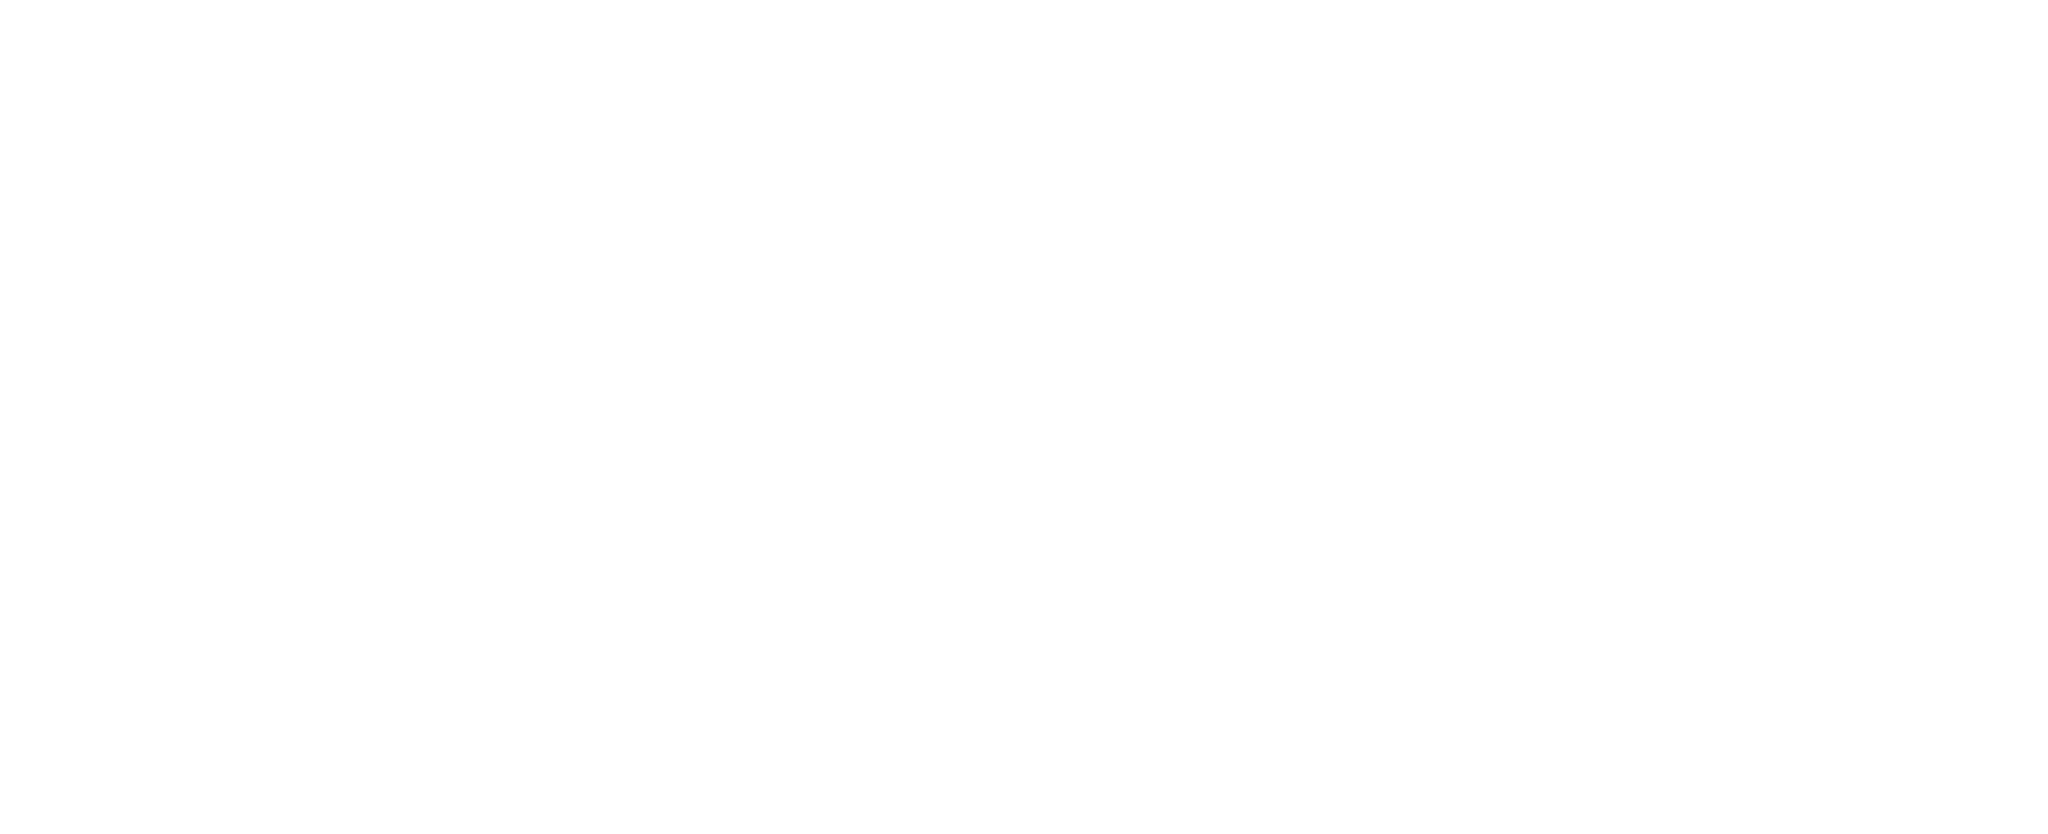 Diverse City Surveyors logo